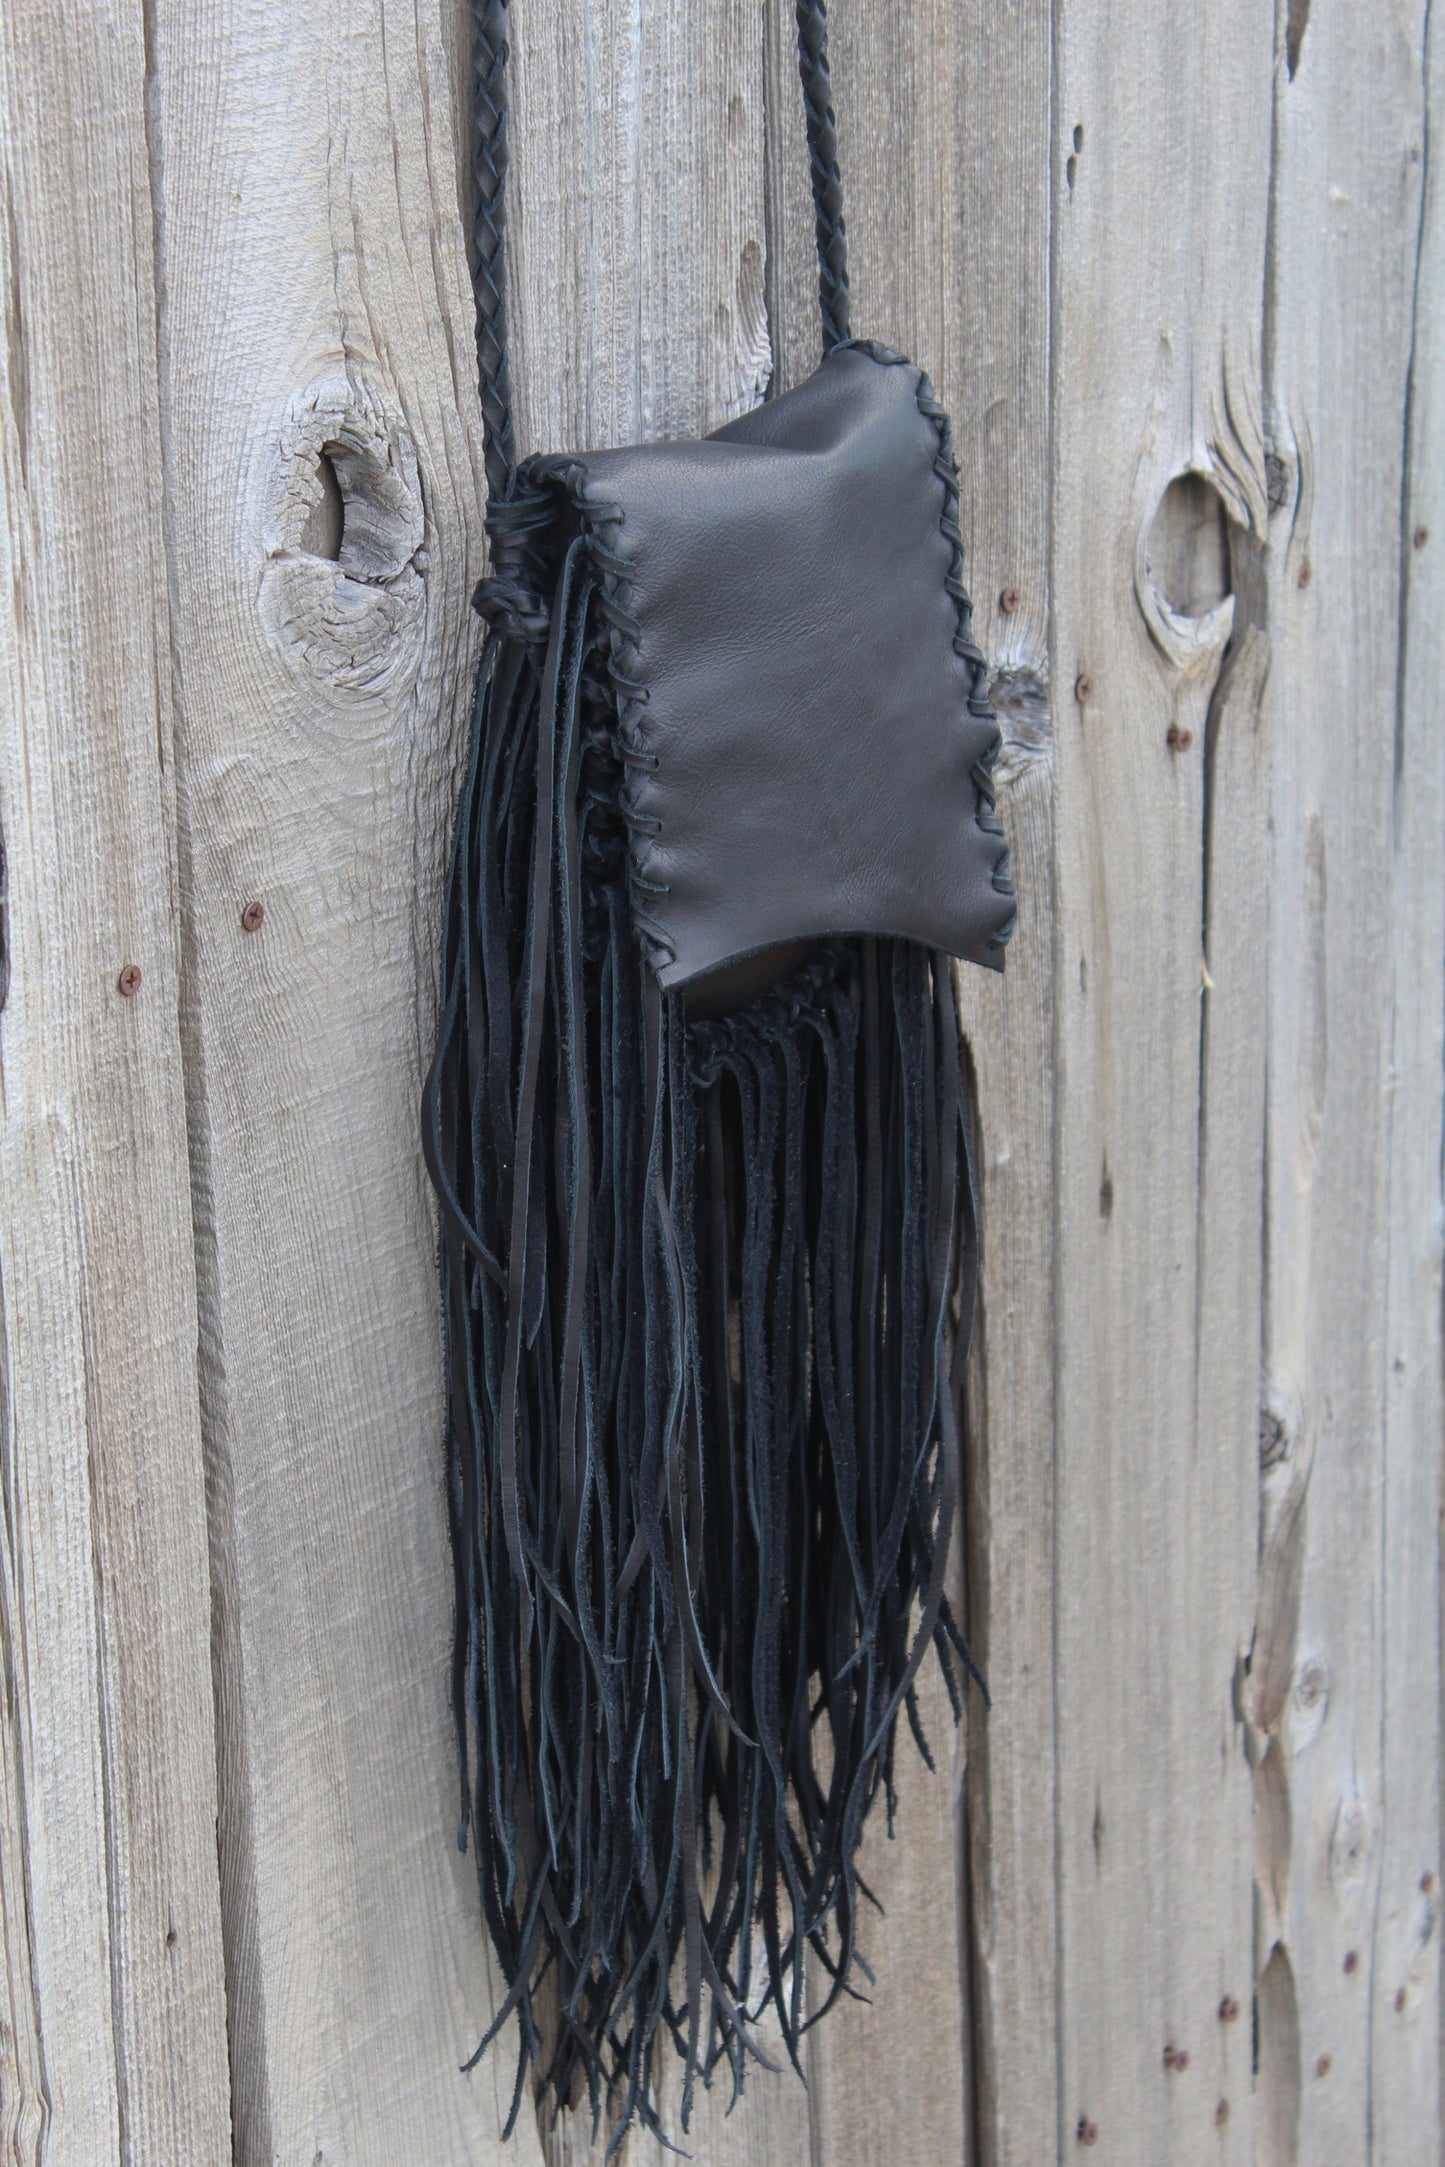 Black leather handbag with fringe, crossbody bag